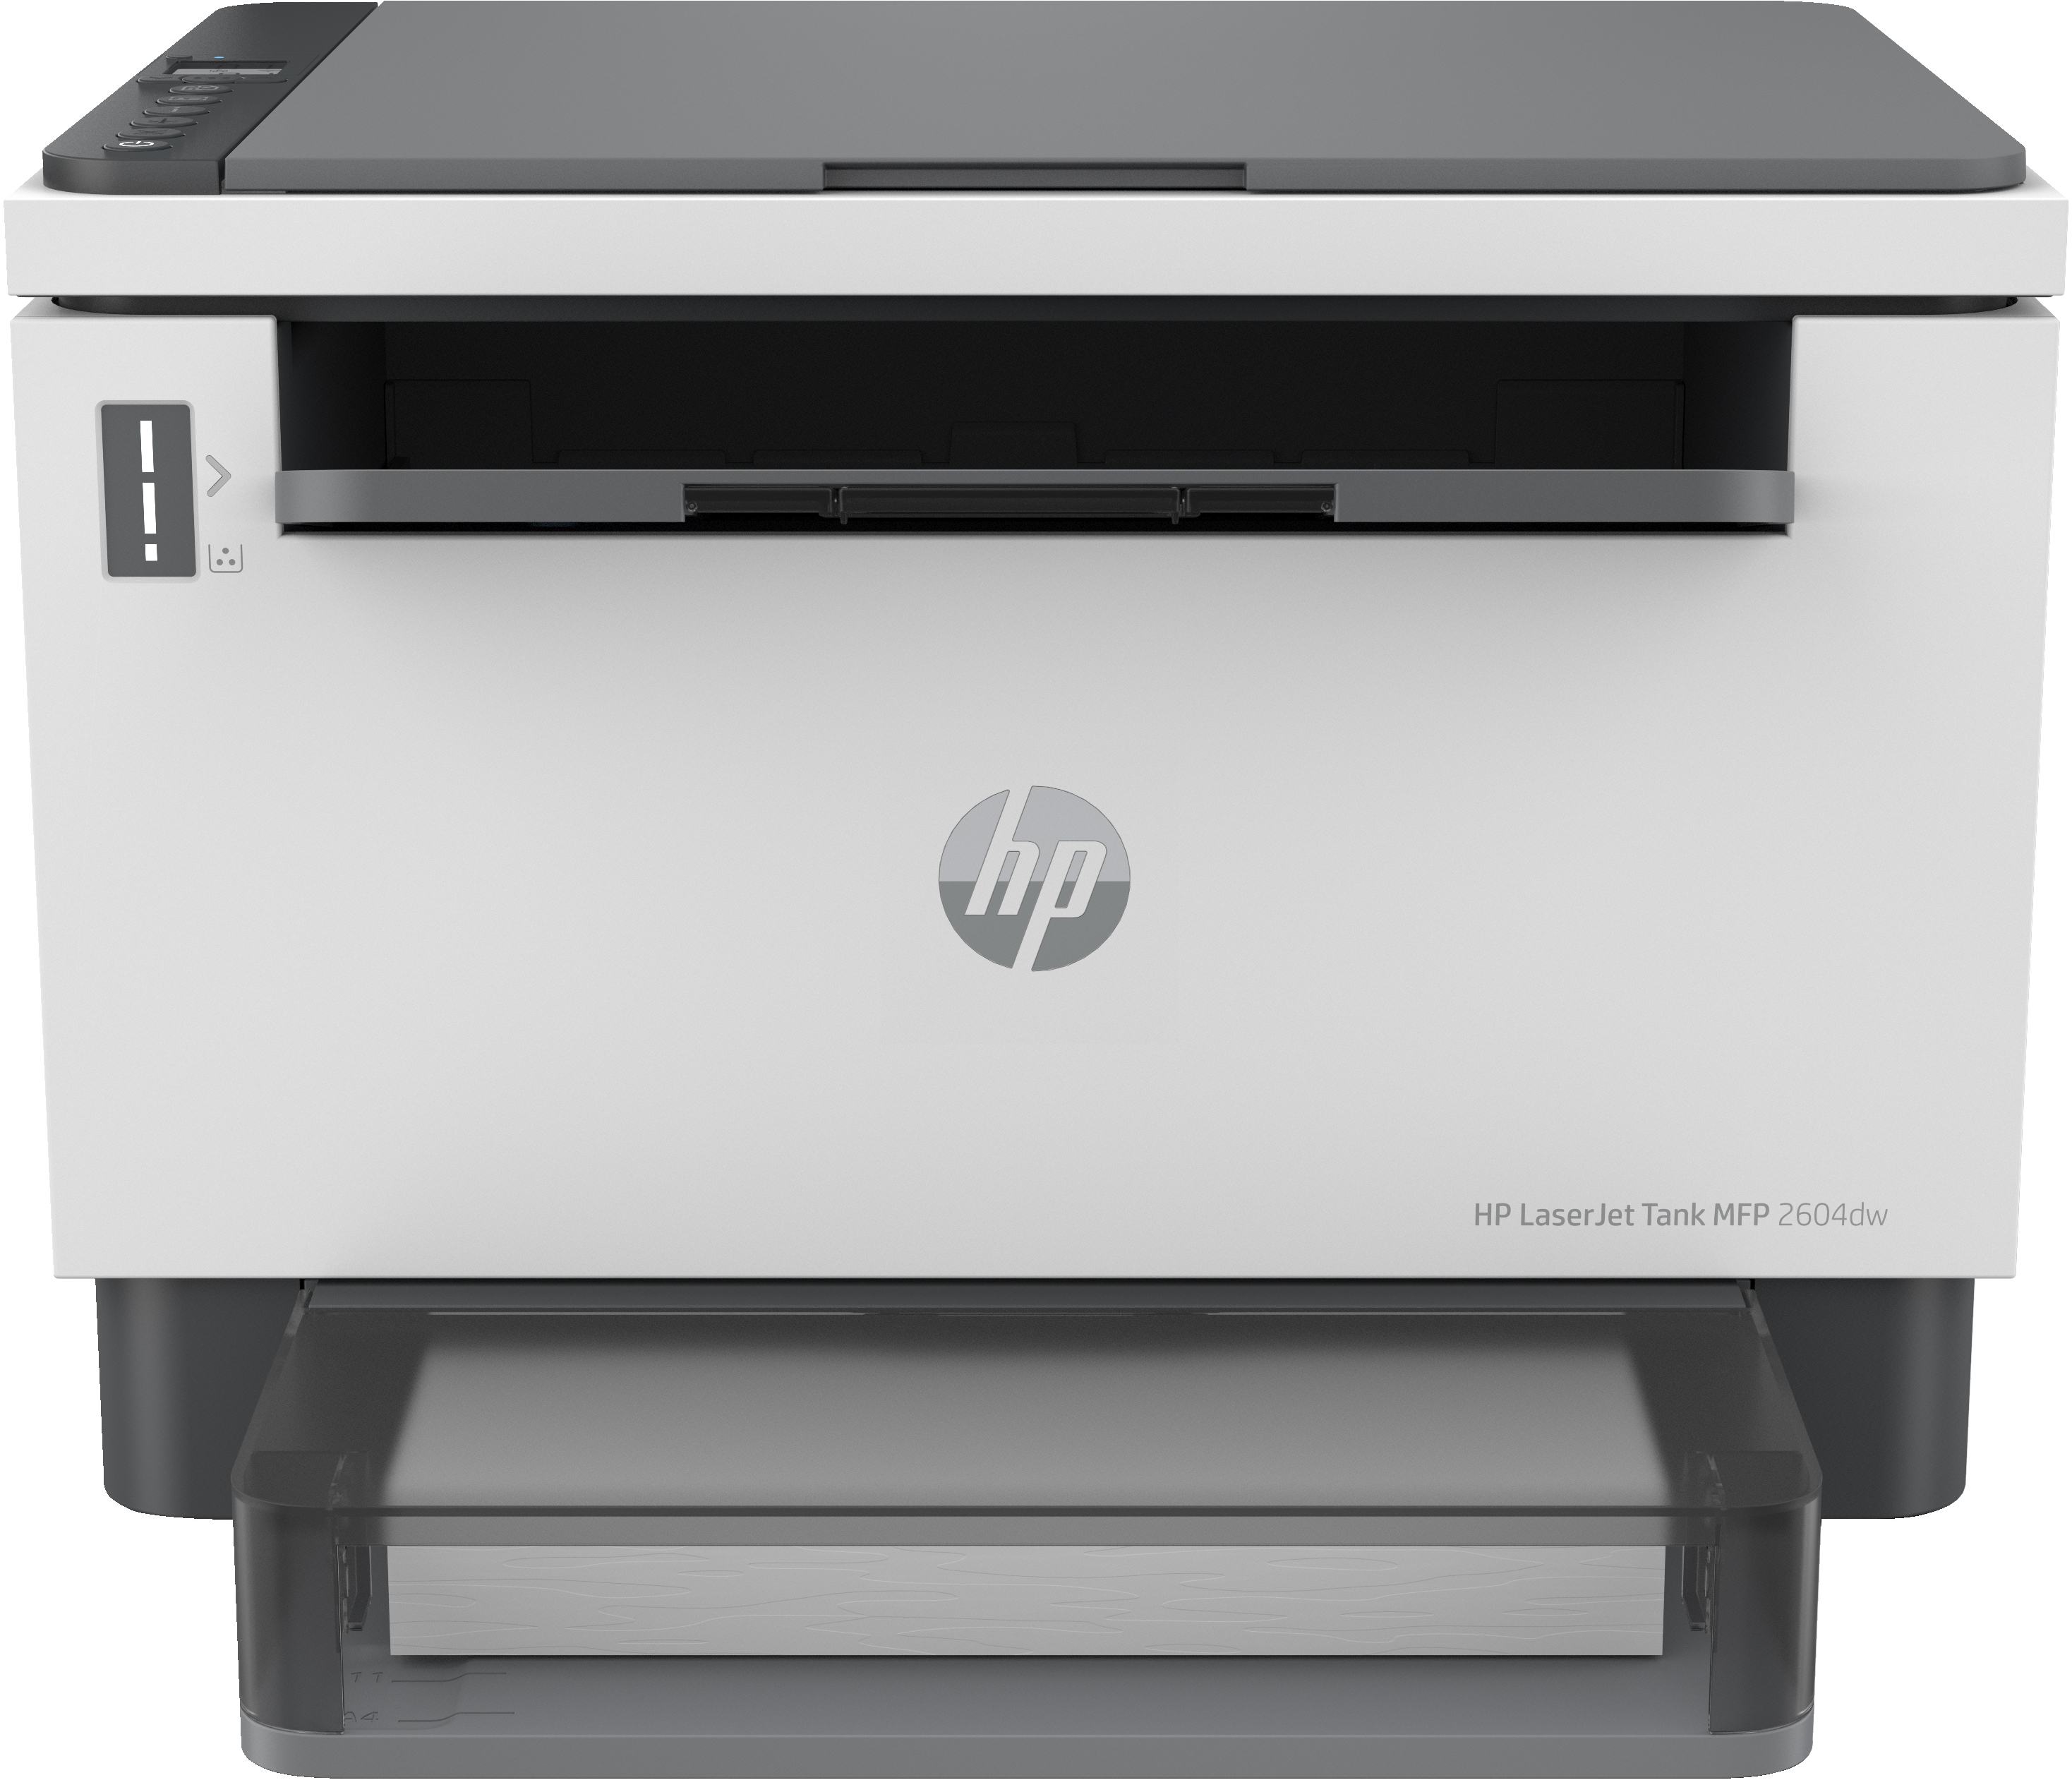 rekenmachine Theoretisch Rijd weg HP LaserJet HP LaserJet Tank MFP 2604dw printer, Zwart-wit, Printer voor  Bedrijf, Draadloos; Dubbelzijdig printen; Scannen naar e-mail; Scannen naar  pdf (381V0A#B19) kopen » Centralpoint